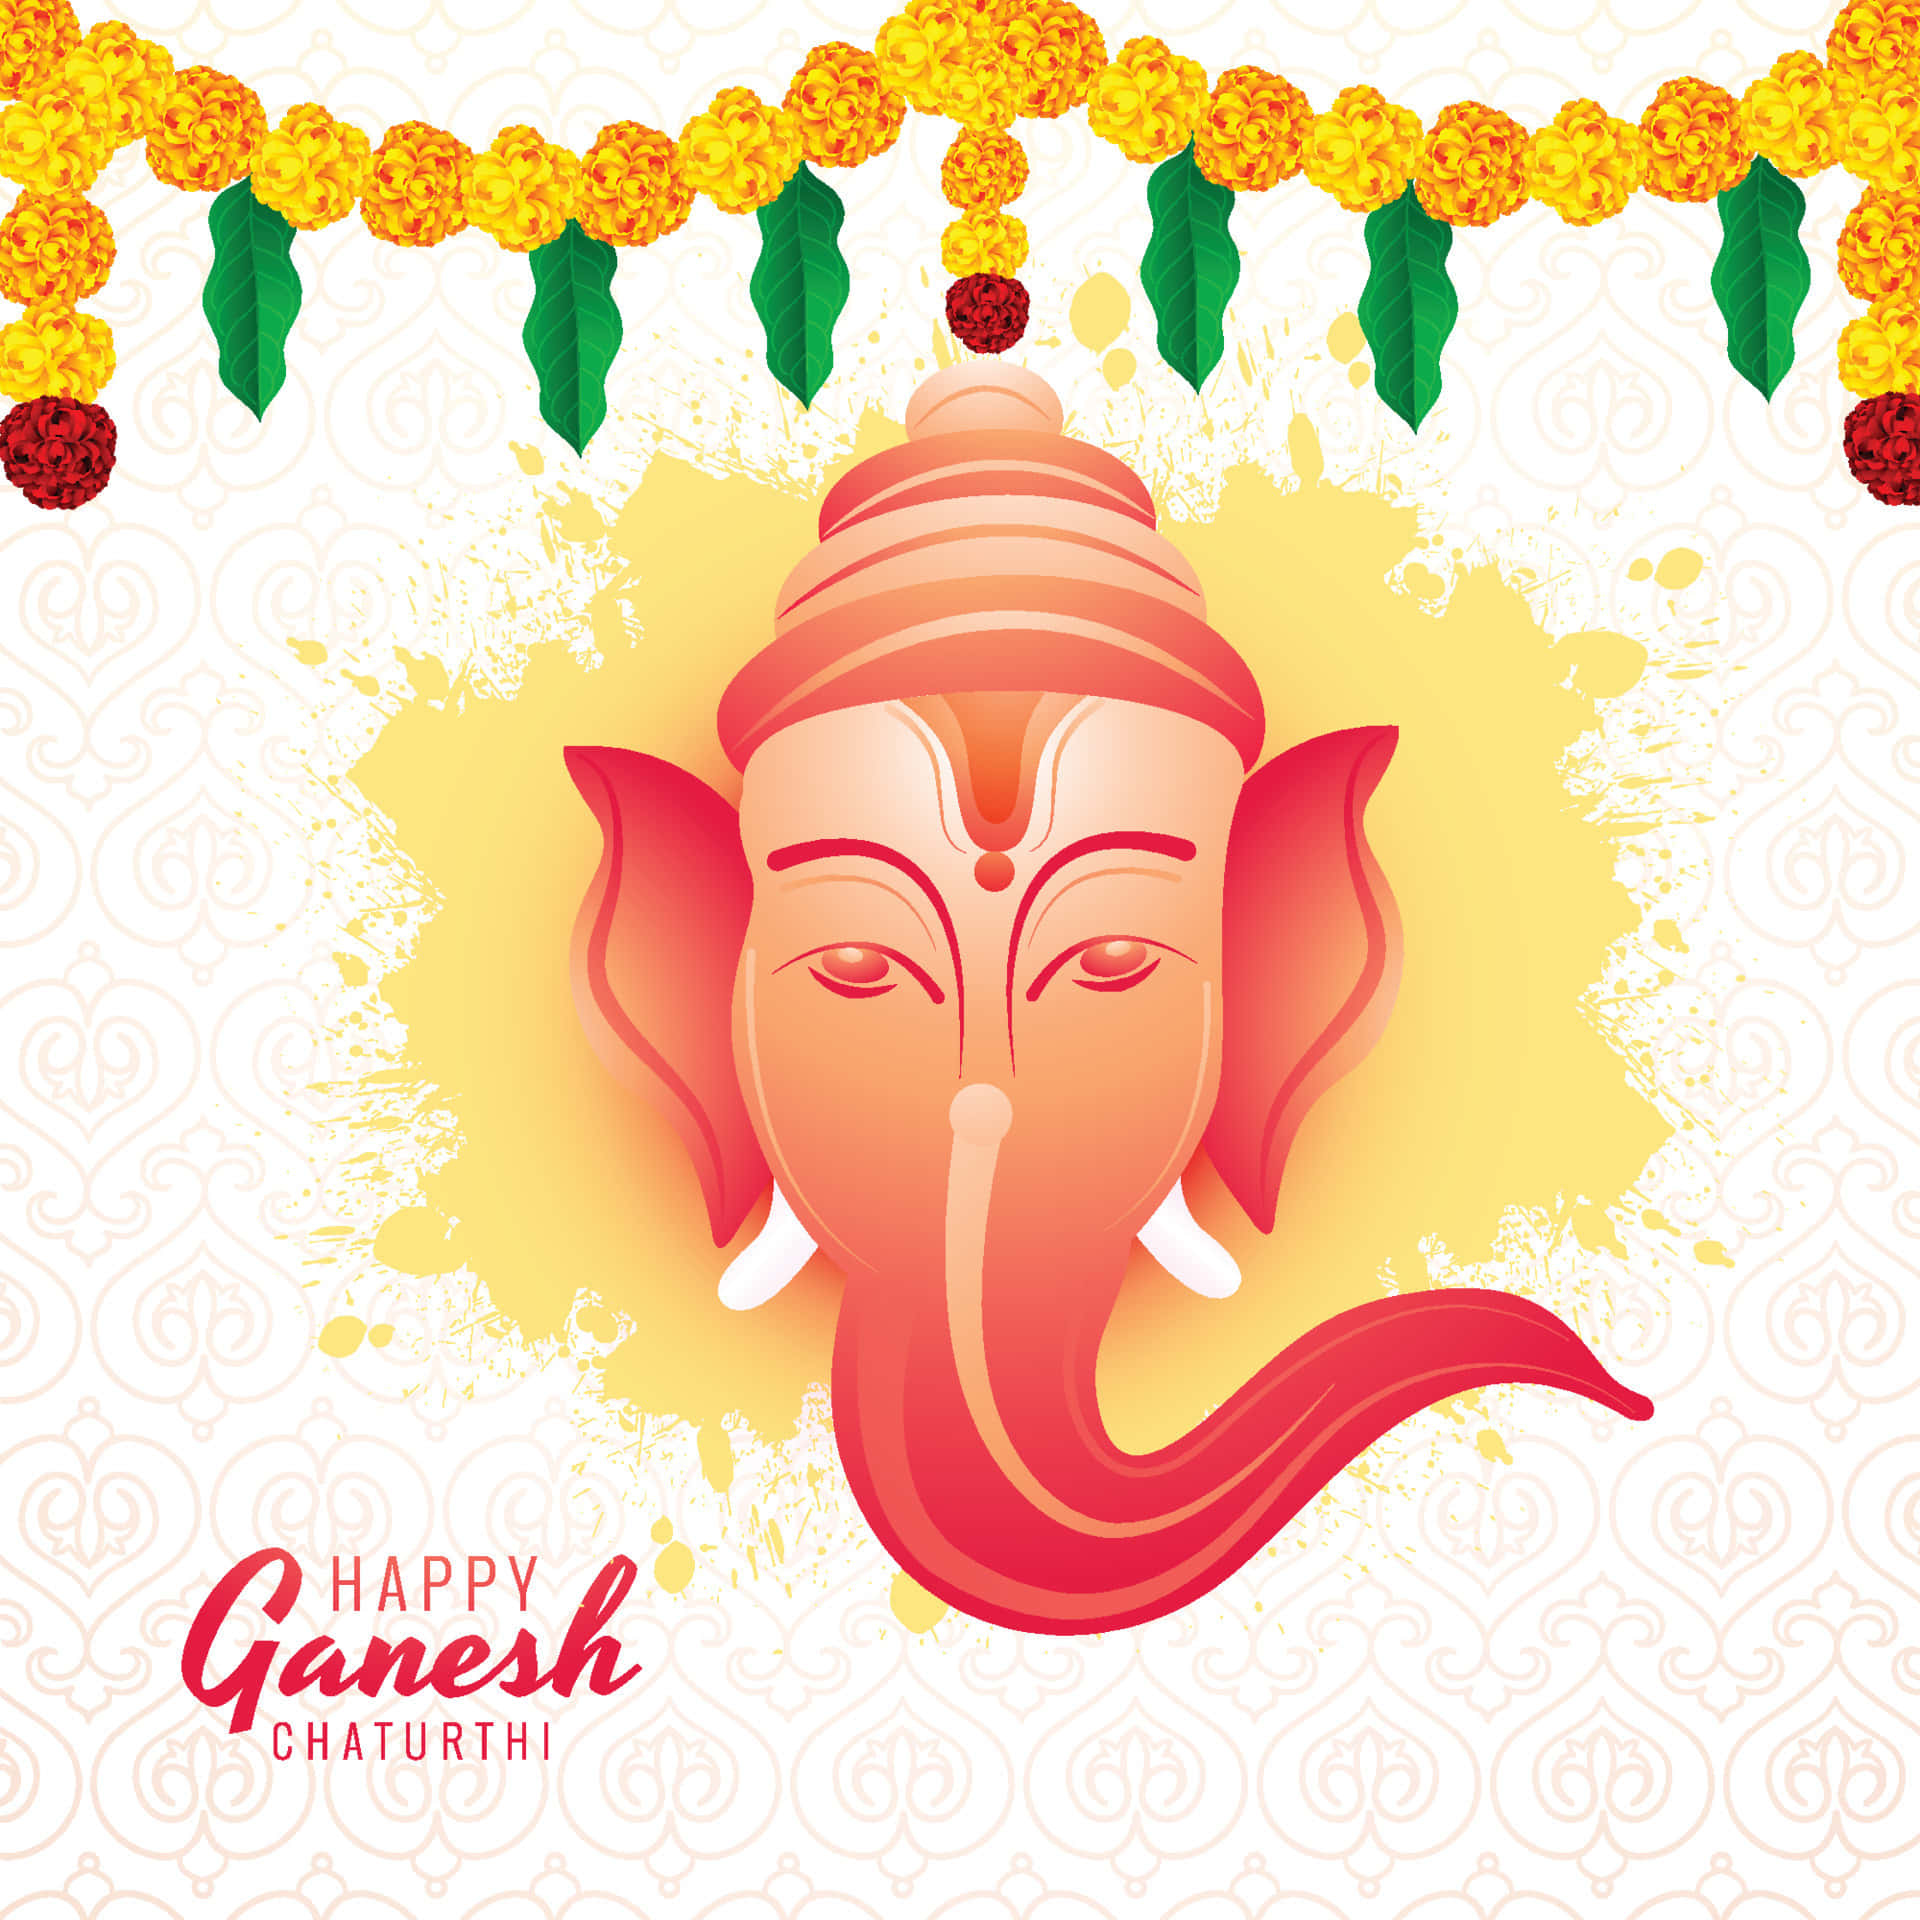 Celebrating Ganesh Chaturthi!